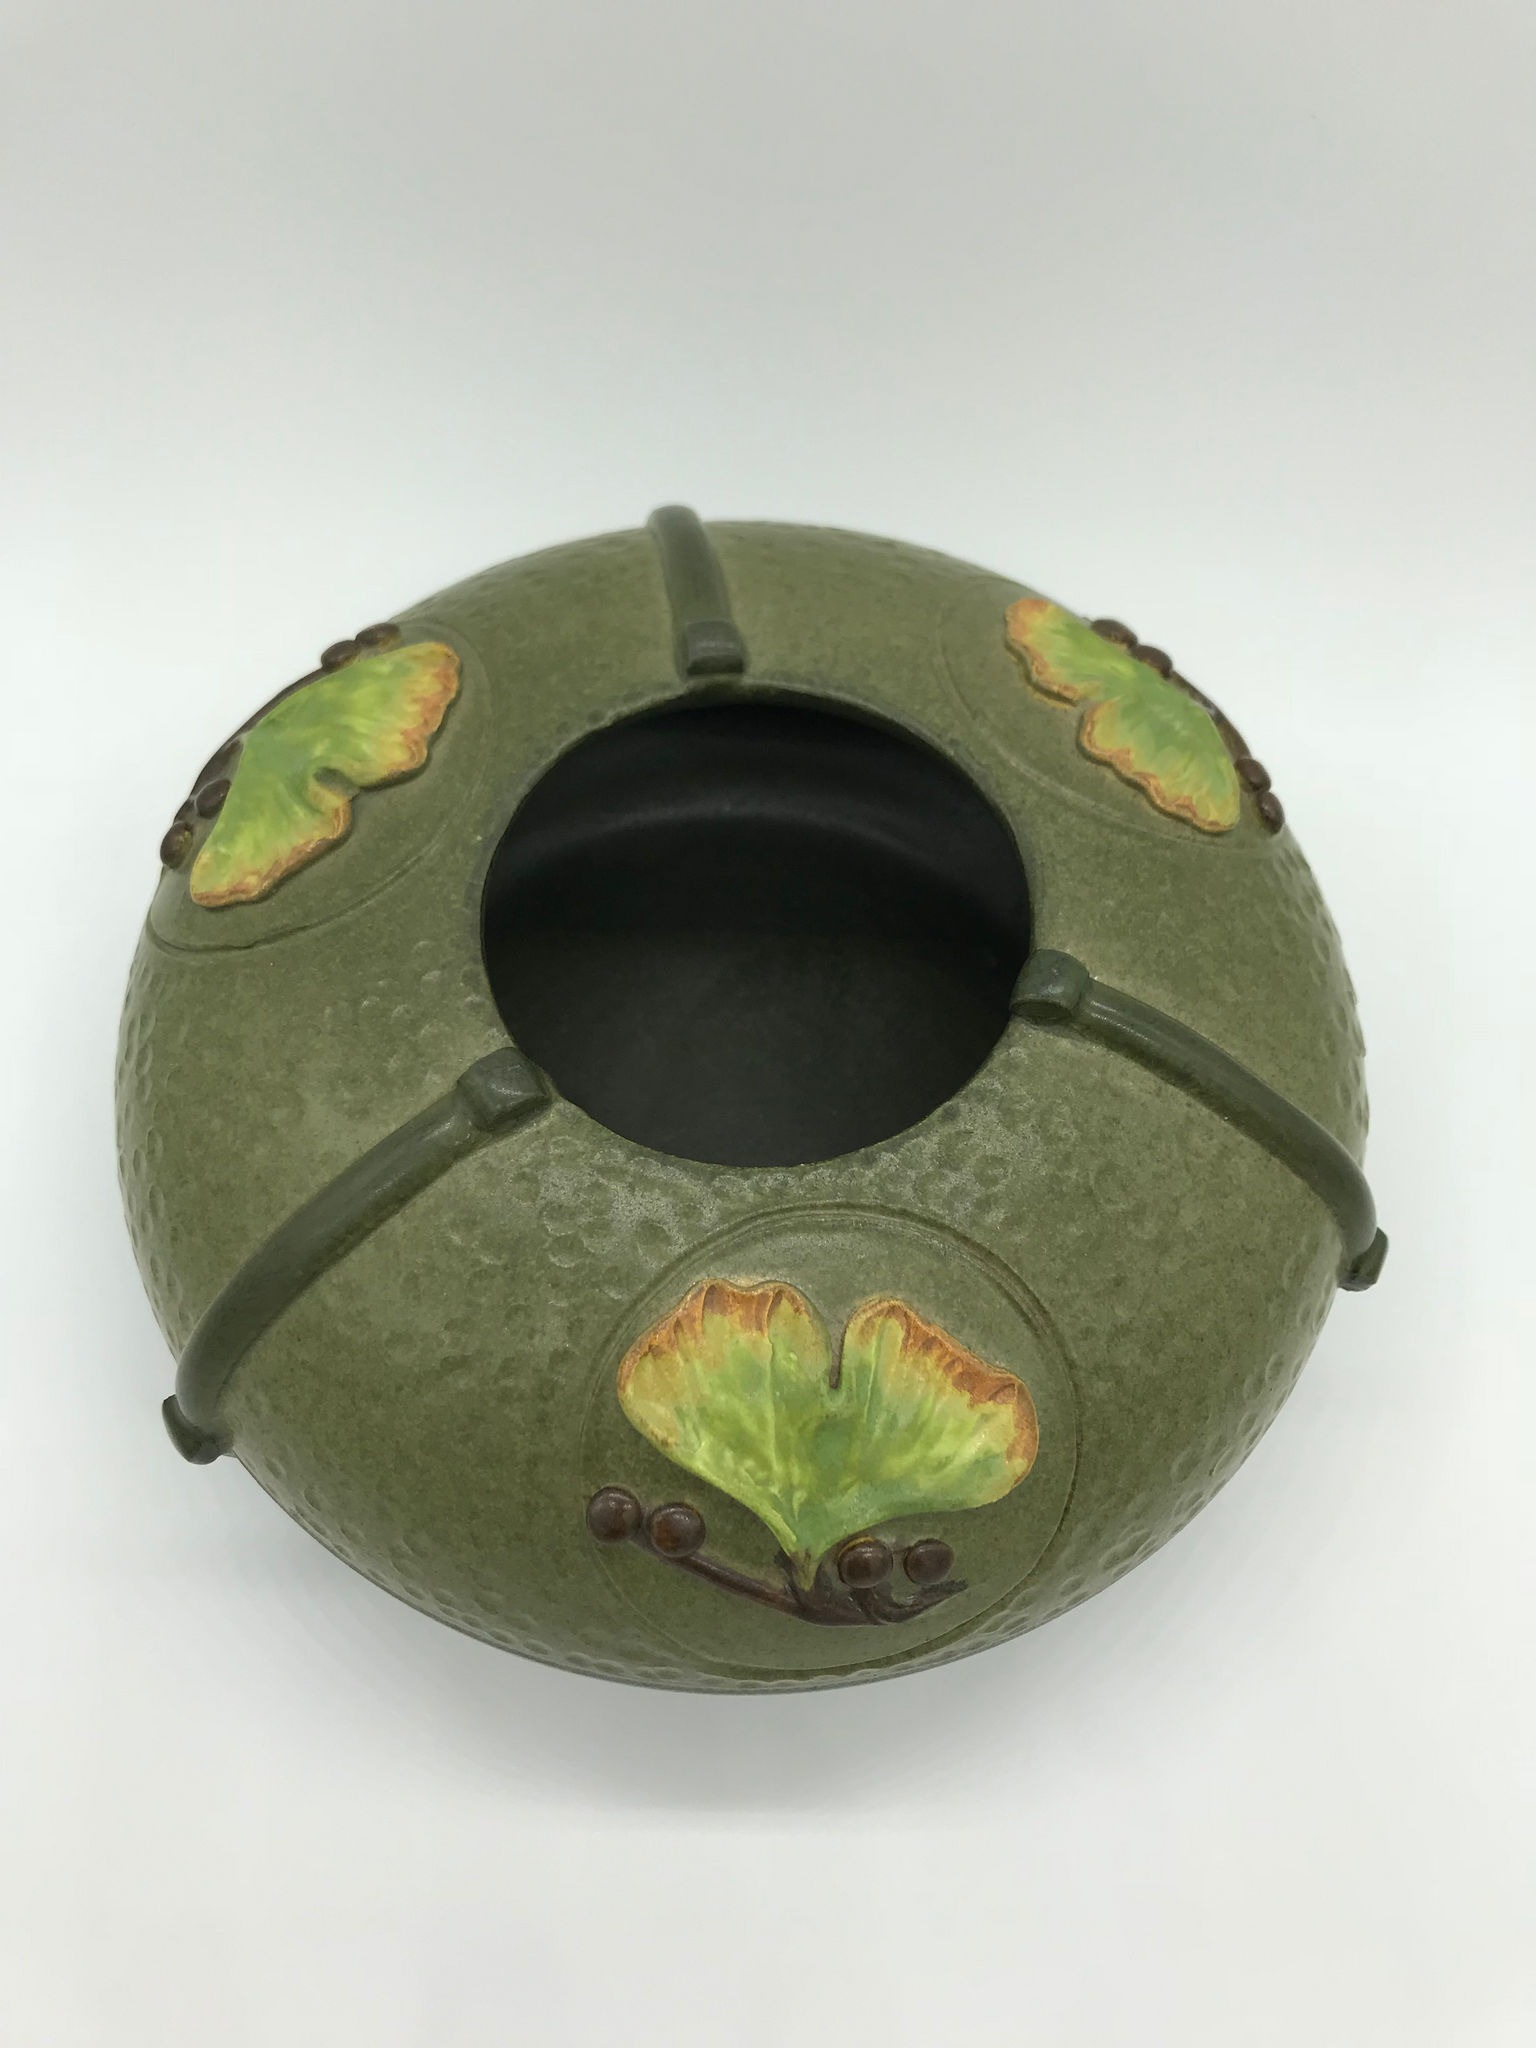 Ephraim Pottery Craftsman Pot